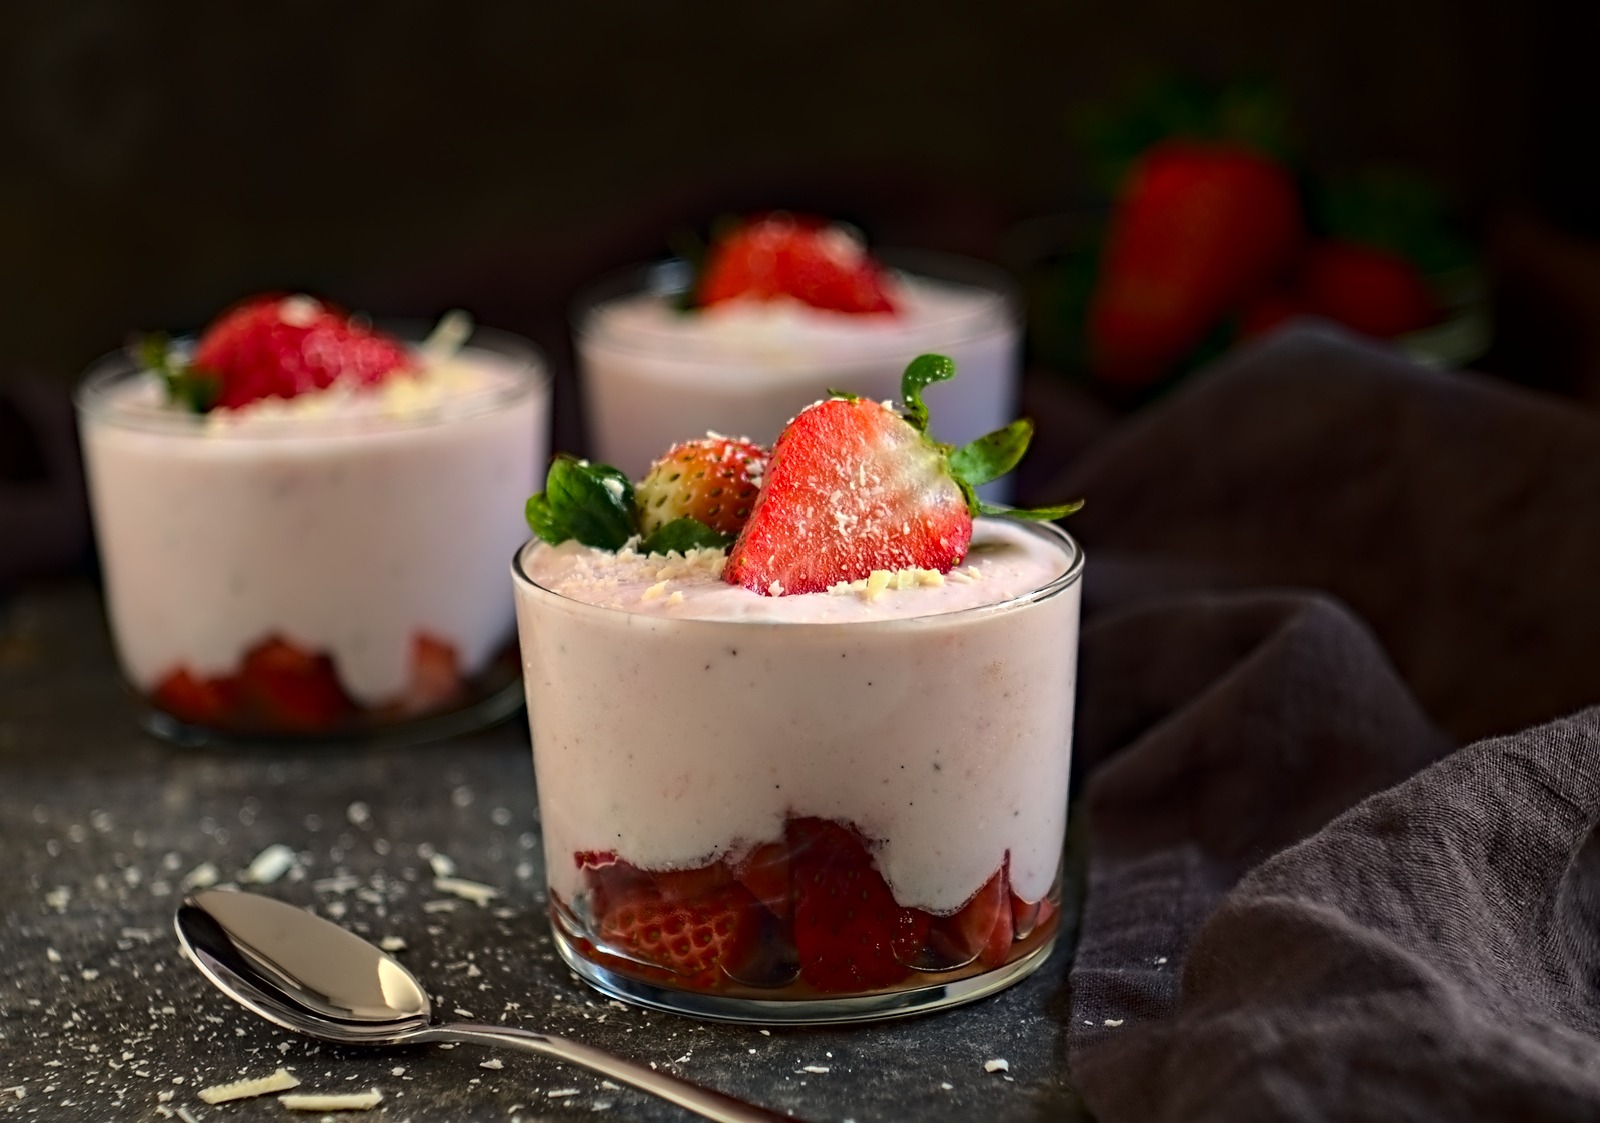 cremiger Erdbeer-Quark – leichtes Dessert im Glas!